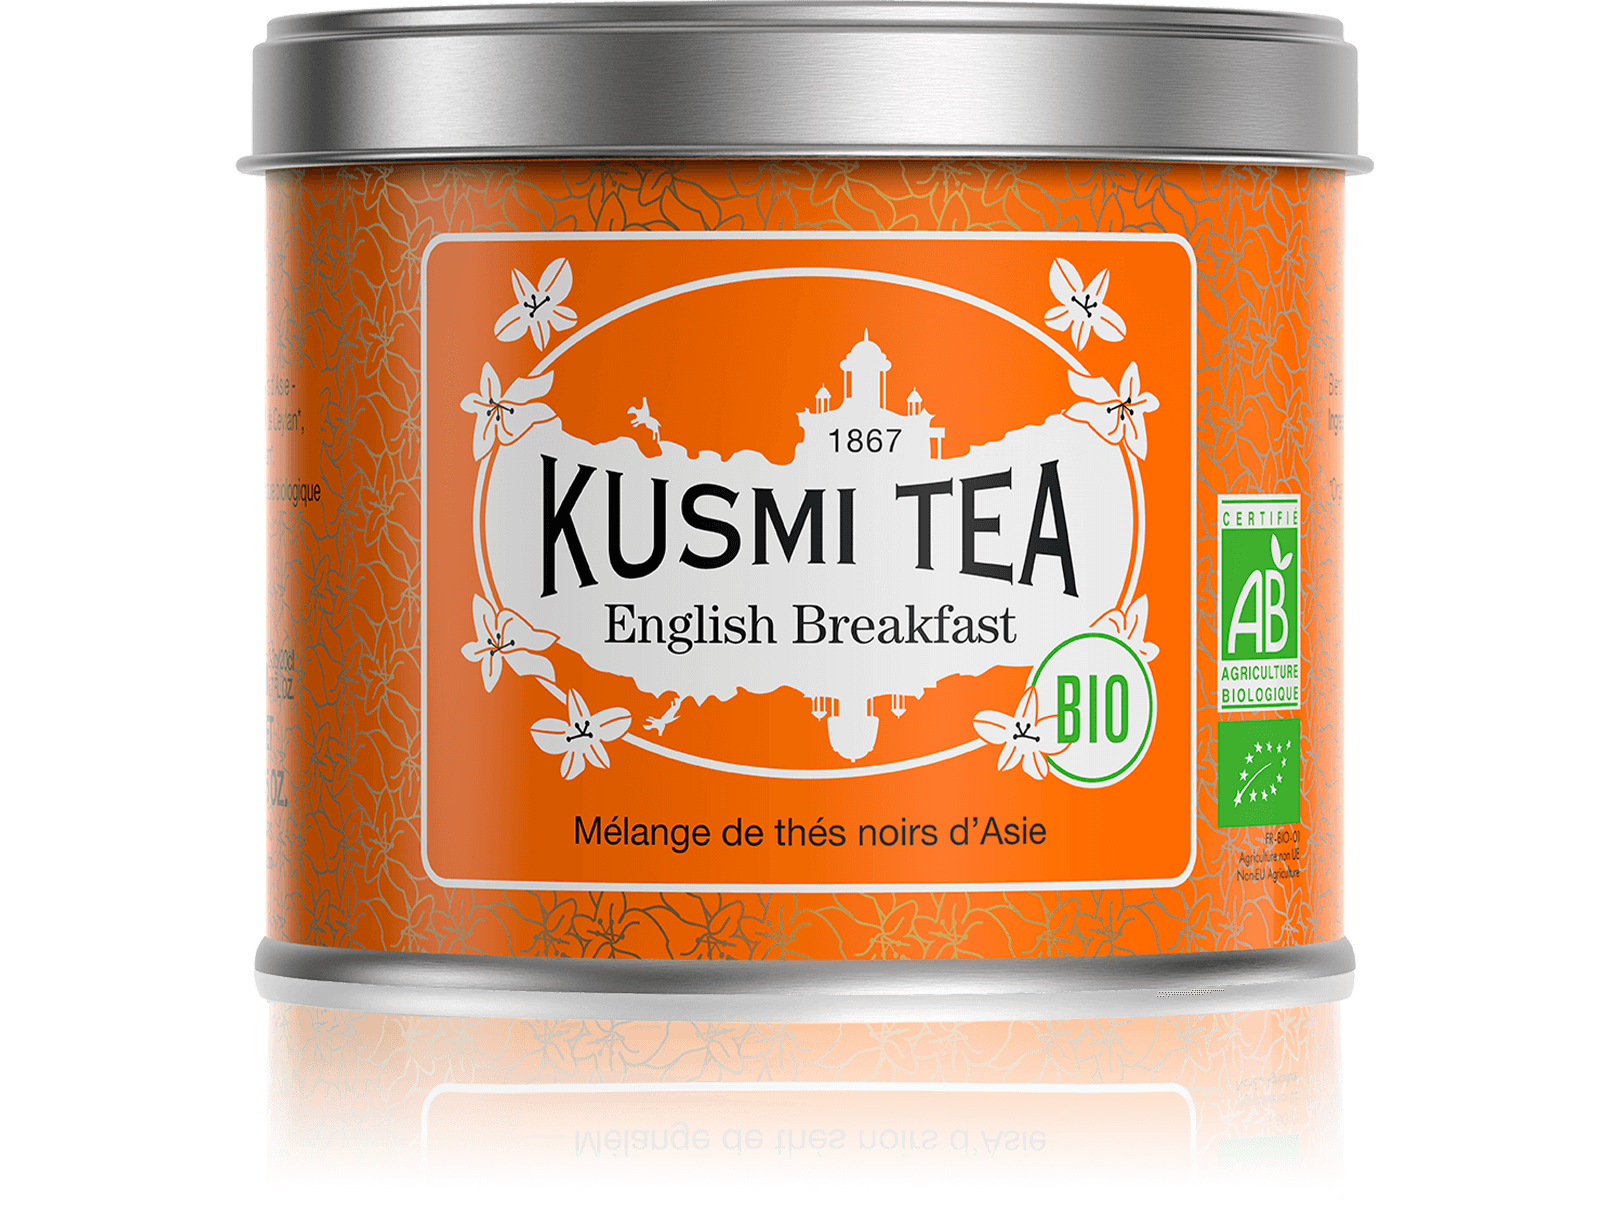 Our teas & herbal teas - Kusmi Tea